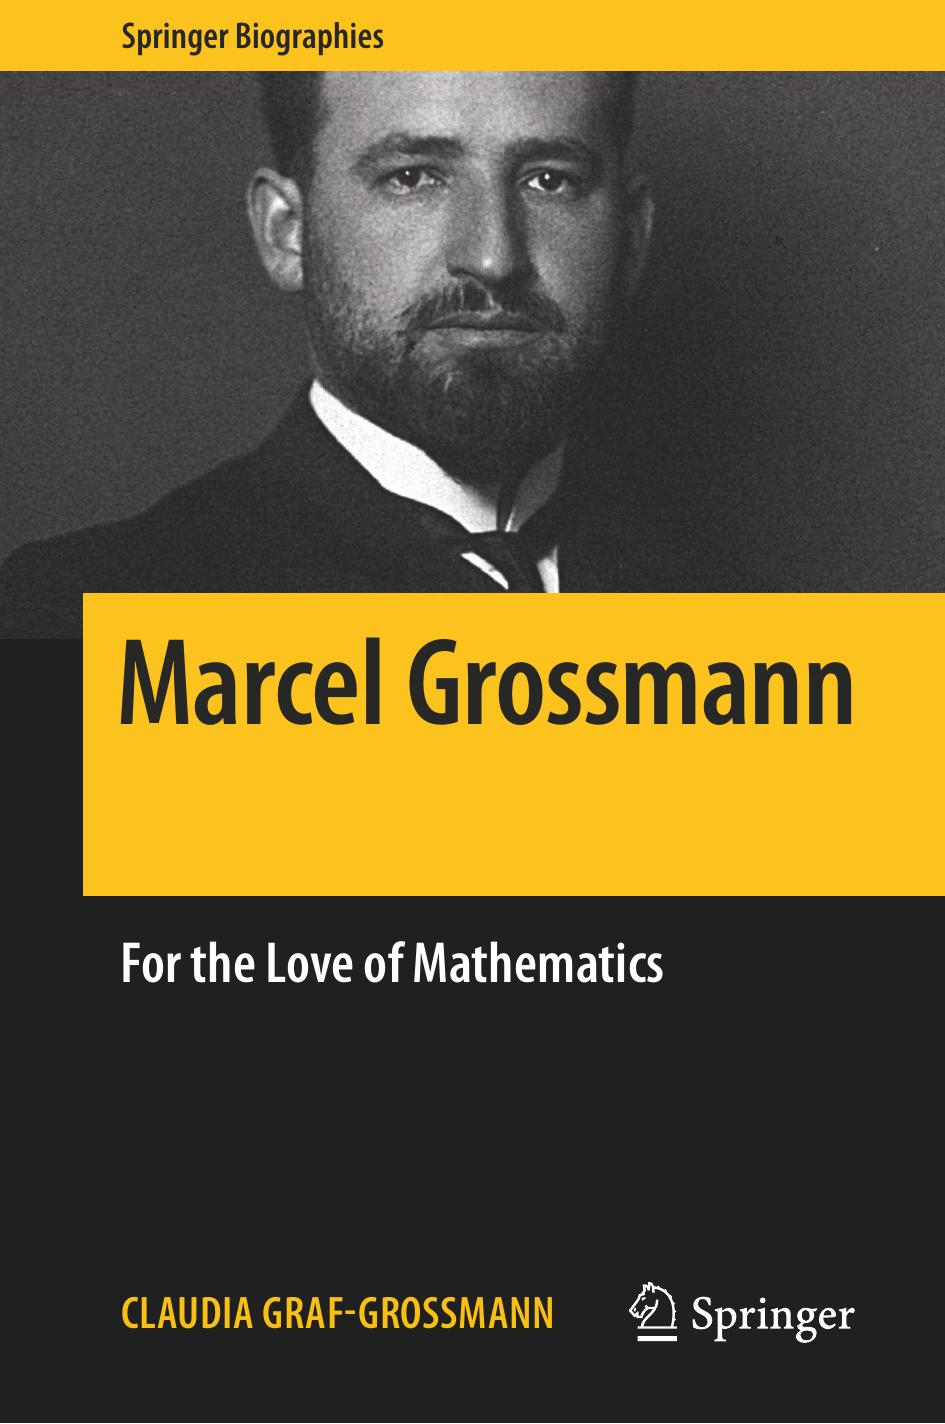 Marcel Grossmann by Claudia Graf-Grossmann